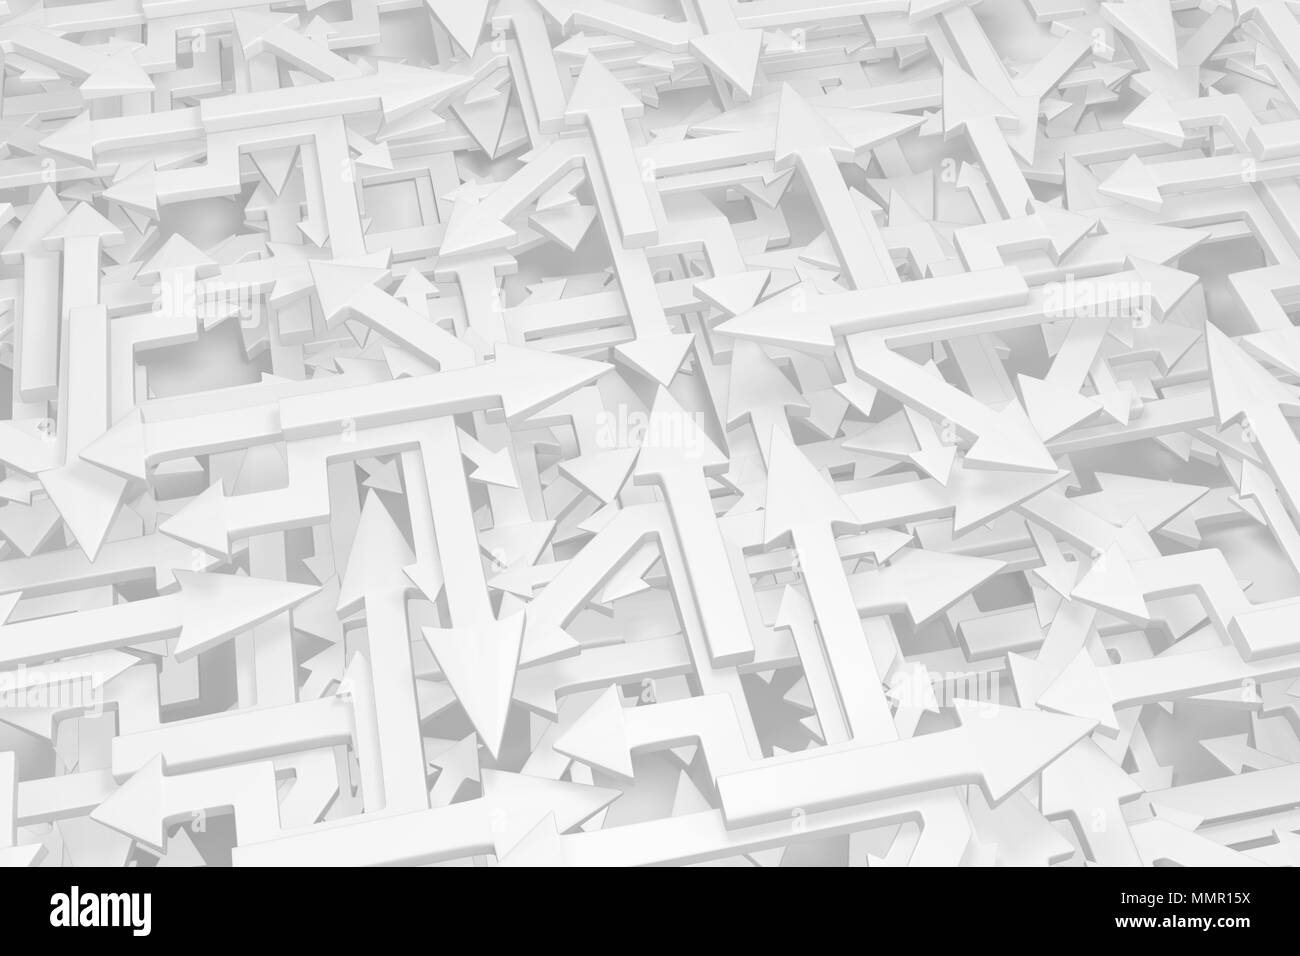 Arrows white chaotic mix, 3d illustration, horizontal Stock Photo